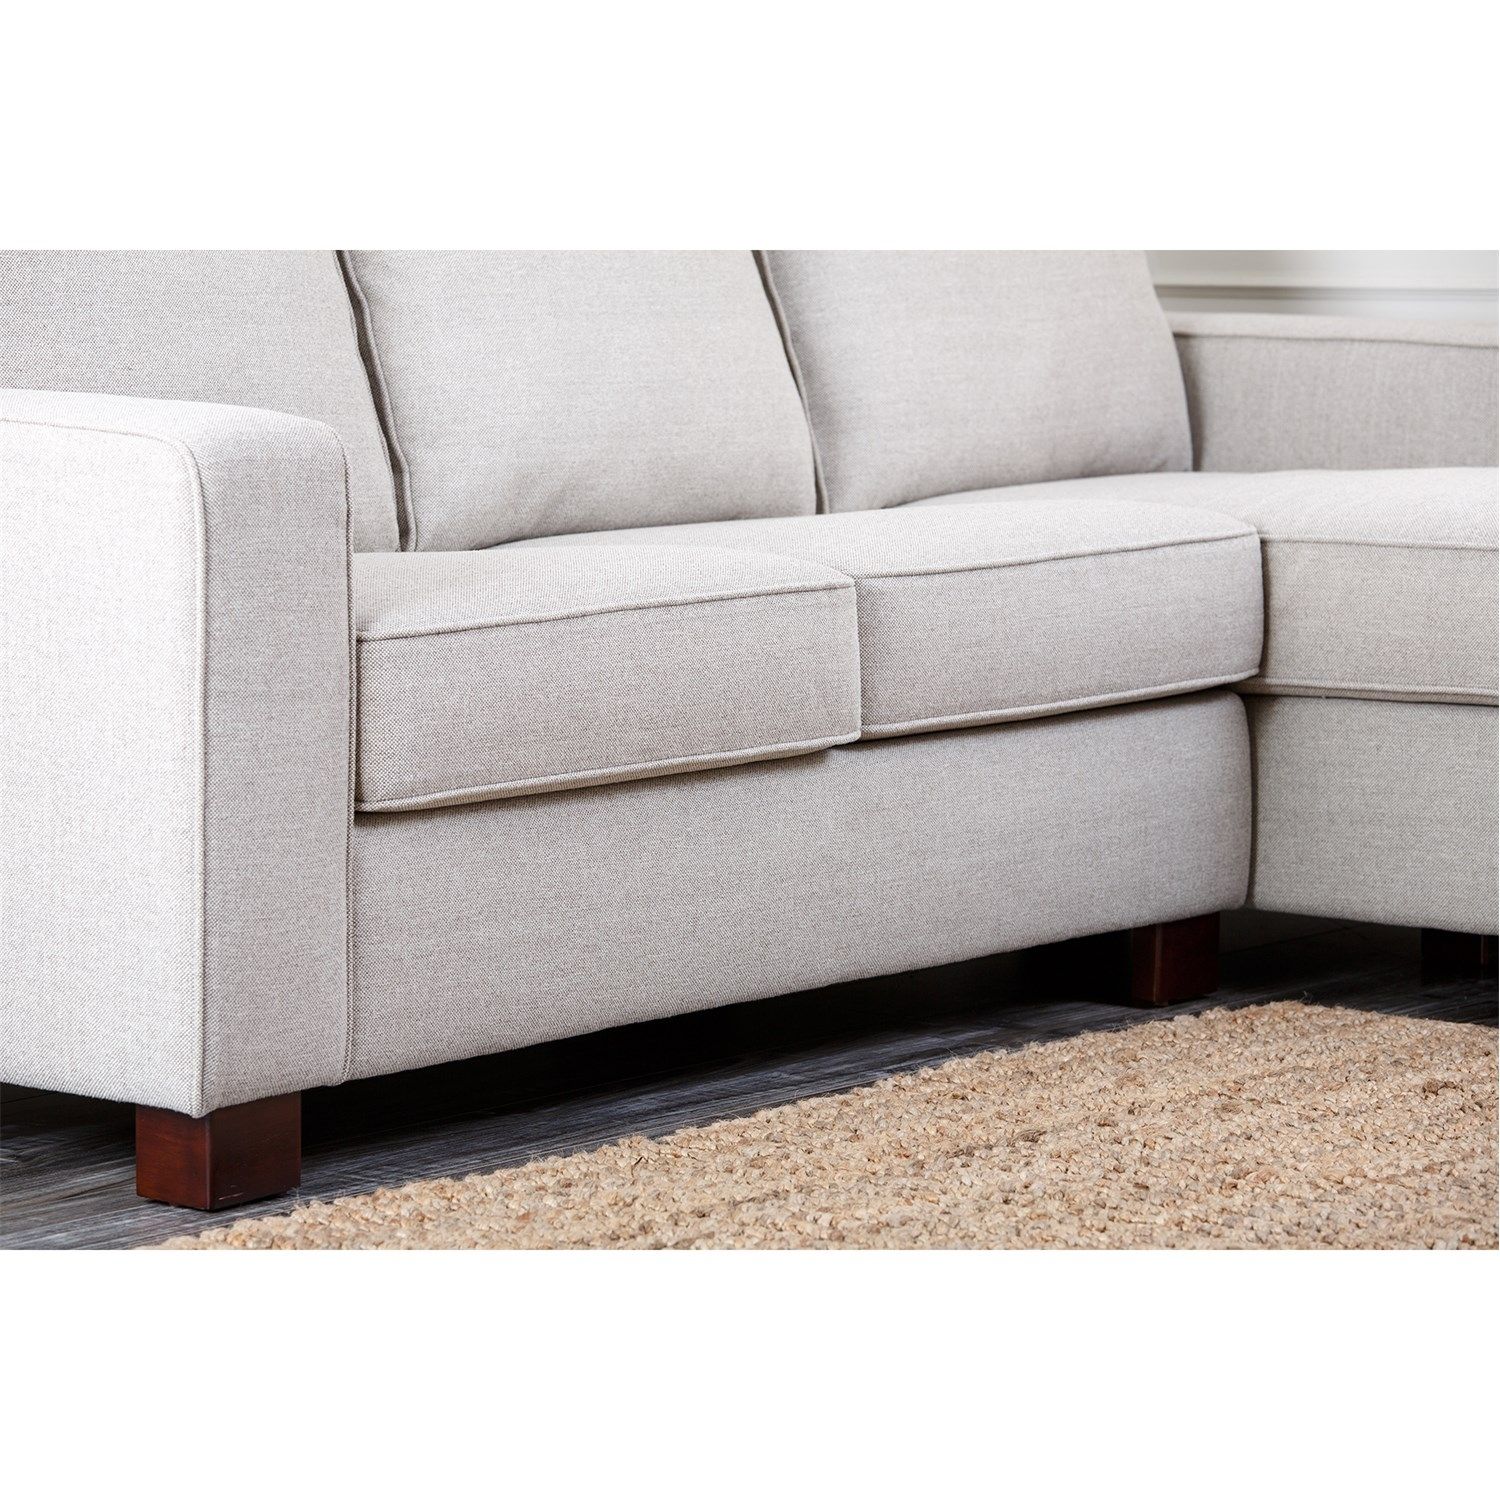 Abbyson Living Rl 1321 Gry Regina Grey Fabric Sectional Sofa For Regina Sectional Sofas (View 7 of 10)